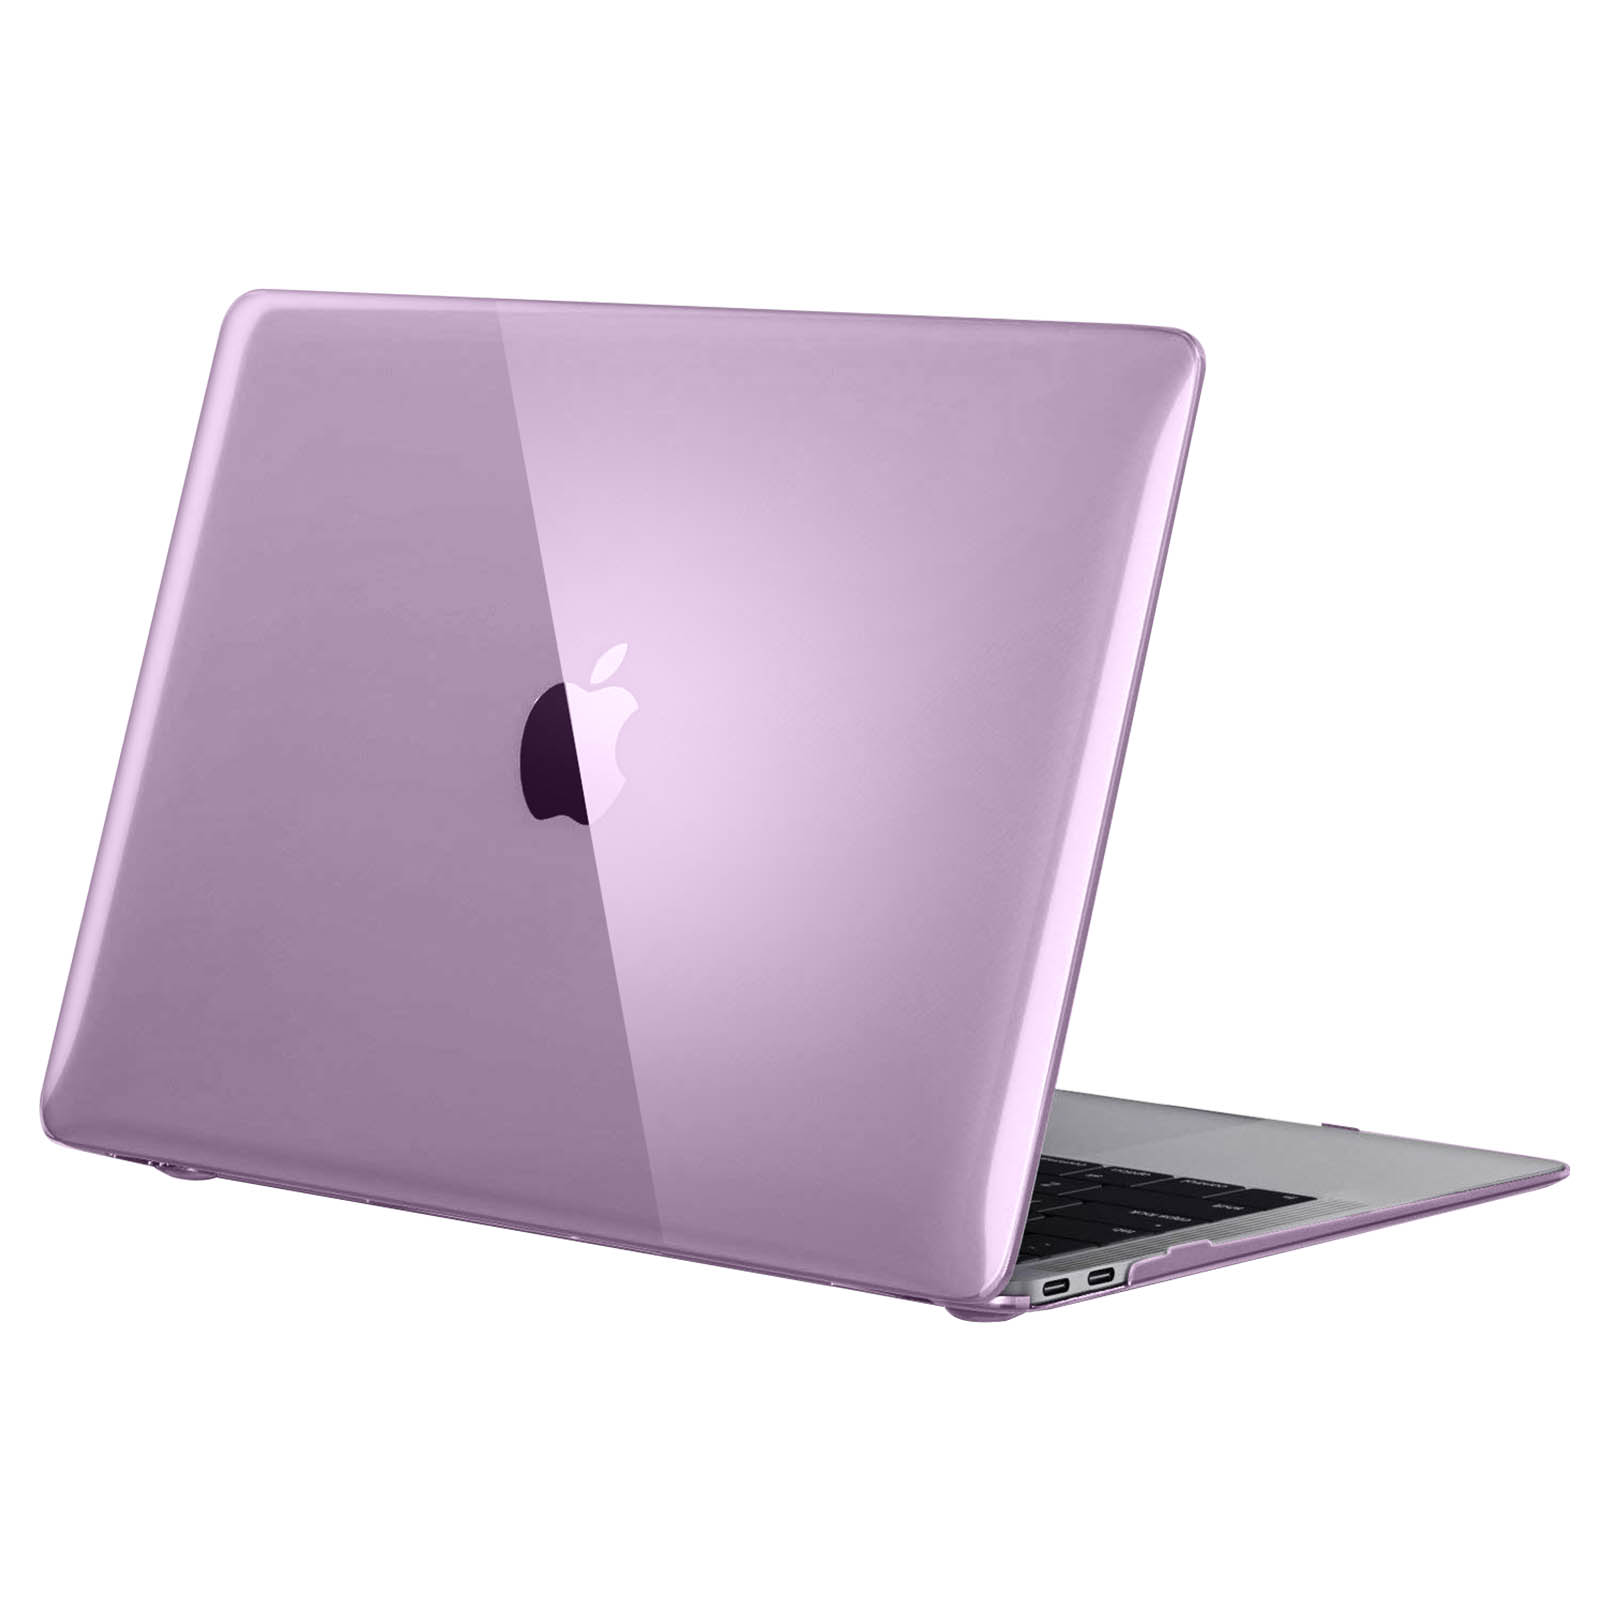 Coque de protection Intégrale Rigide, Design Transparent - Violet p. MacBook  Air 13 2020 / 2019 / 2018 - Français